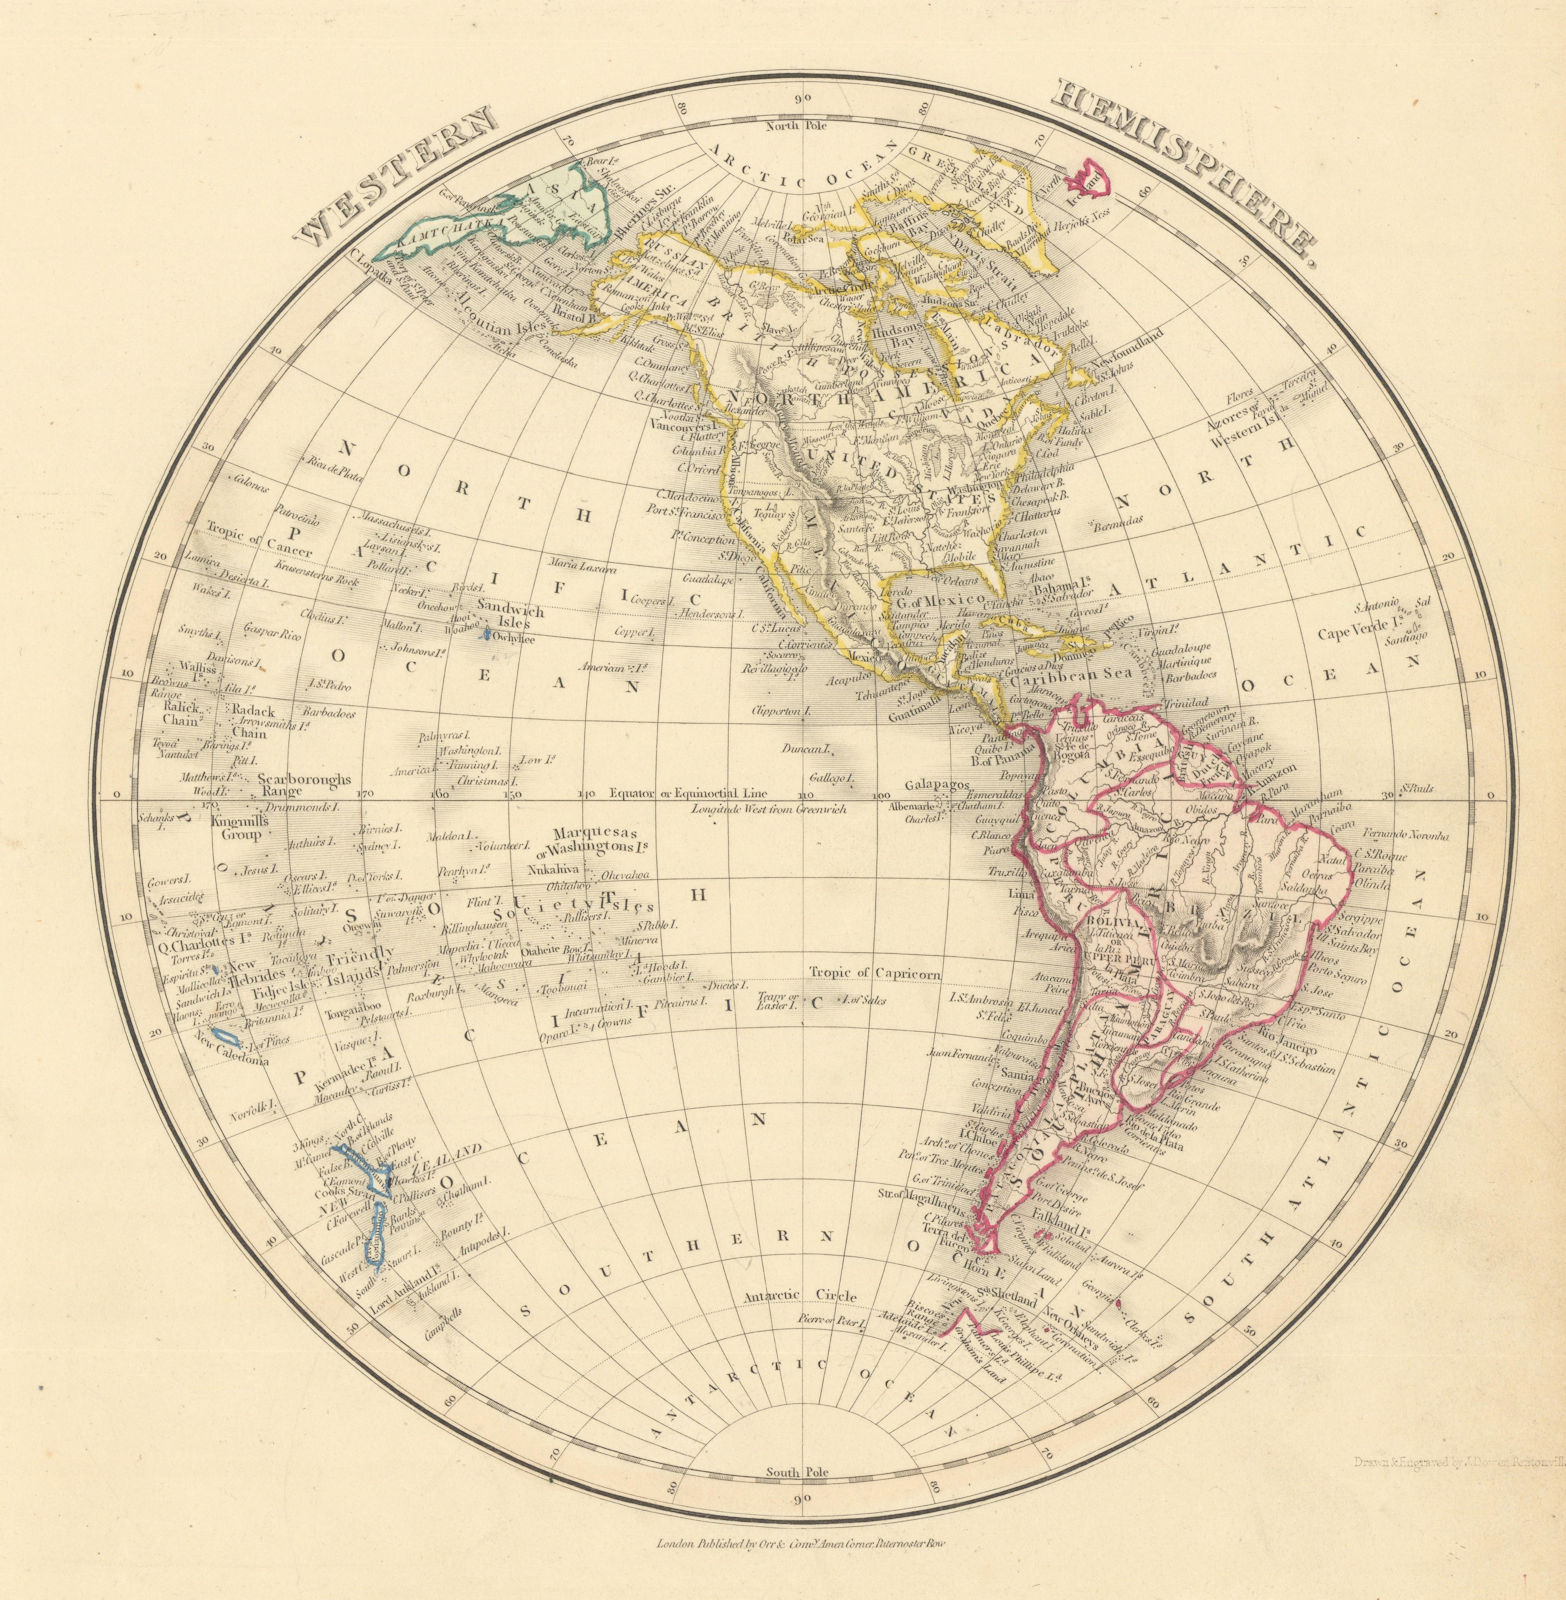 Associate Product Western Hemisphere by John Dower. Americas 1845 old antique map plan chart